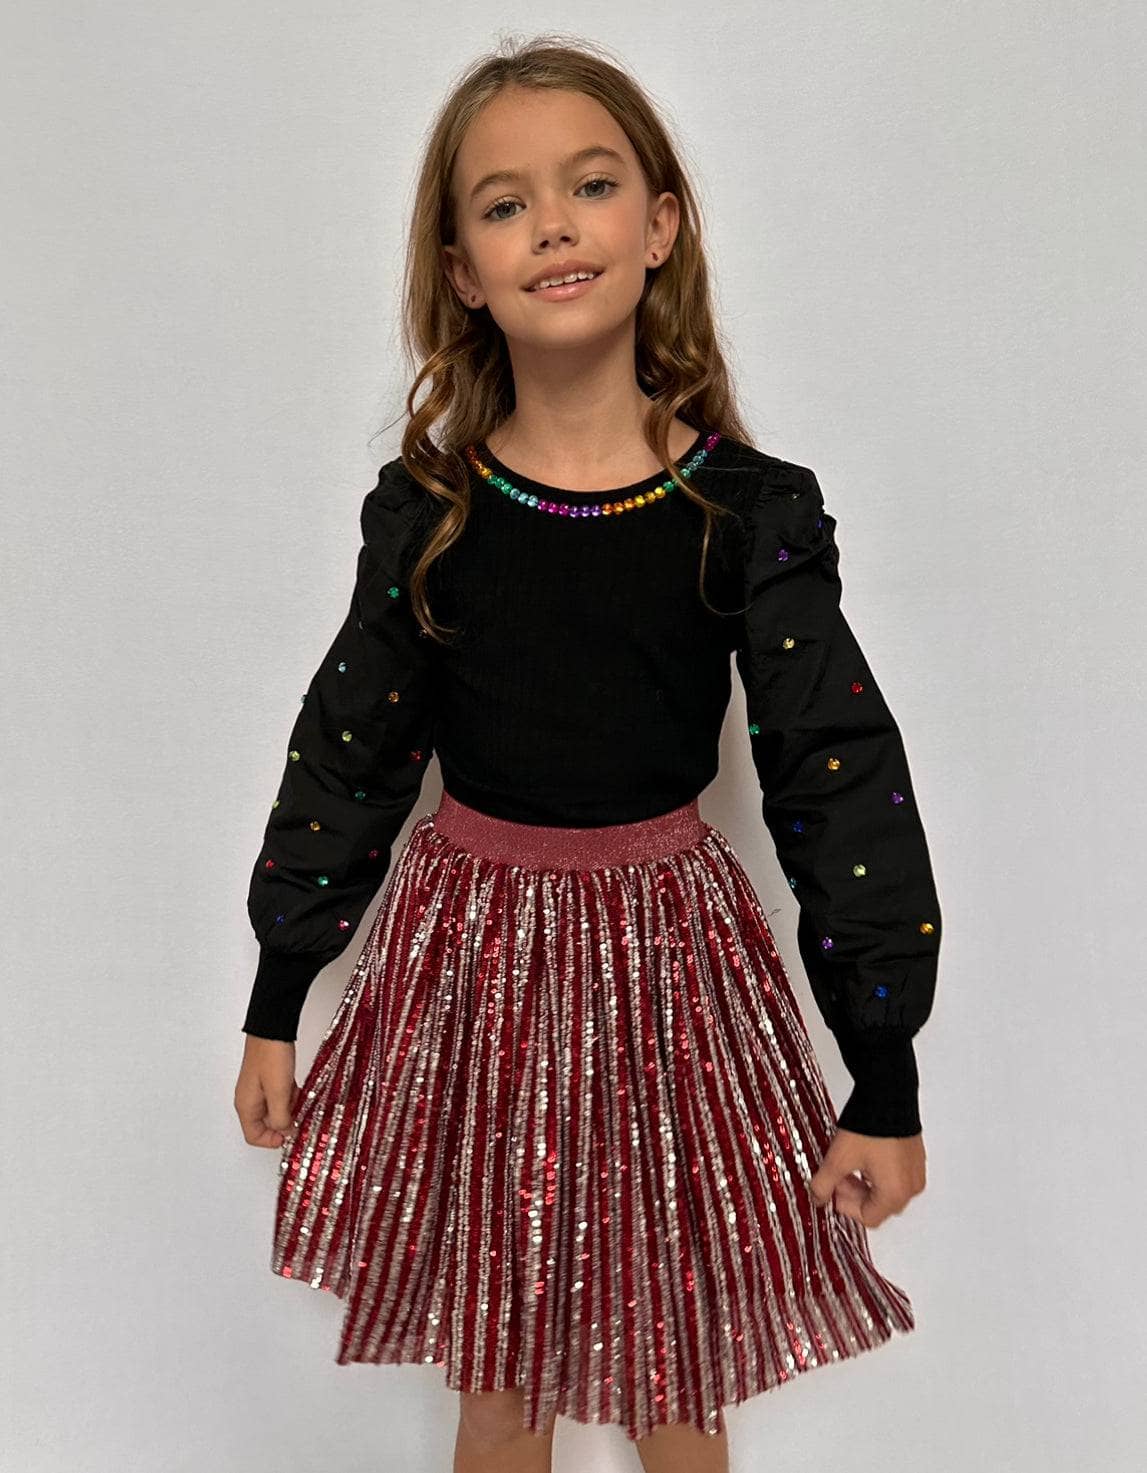 Treat Yo Self: Sequin Striped Skirt - Showit Blog